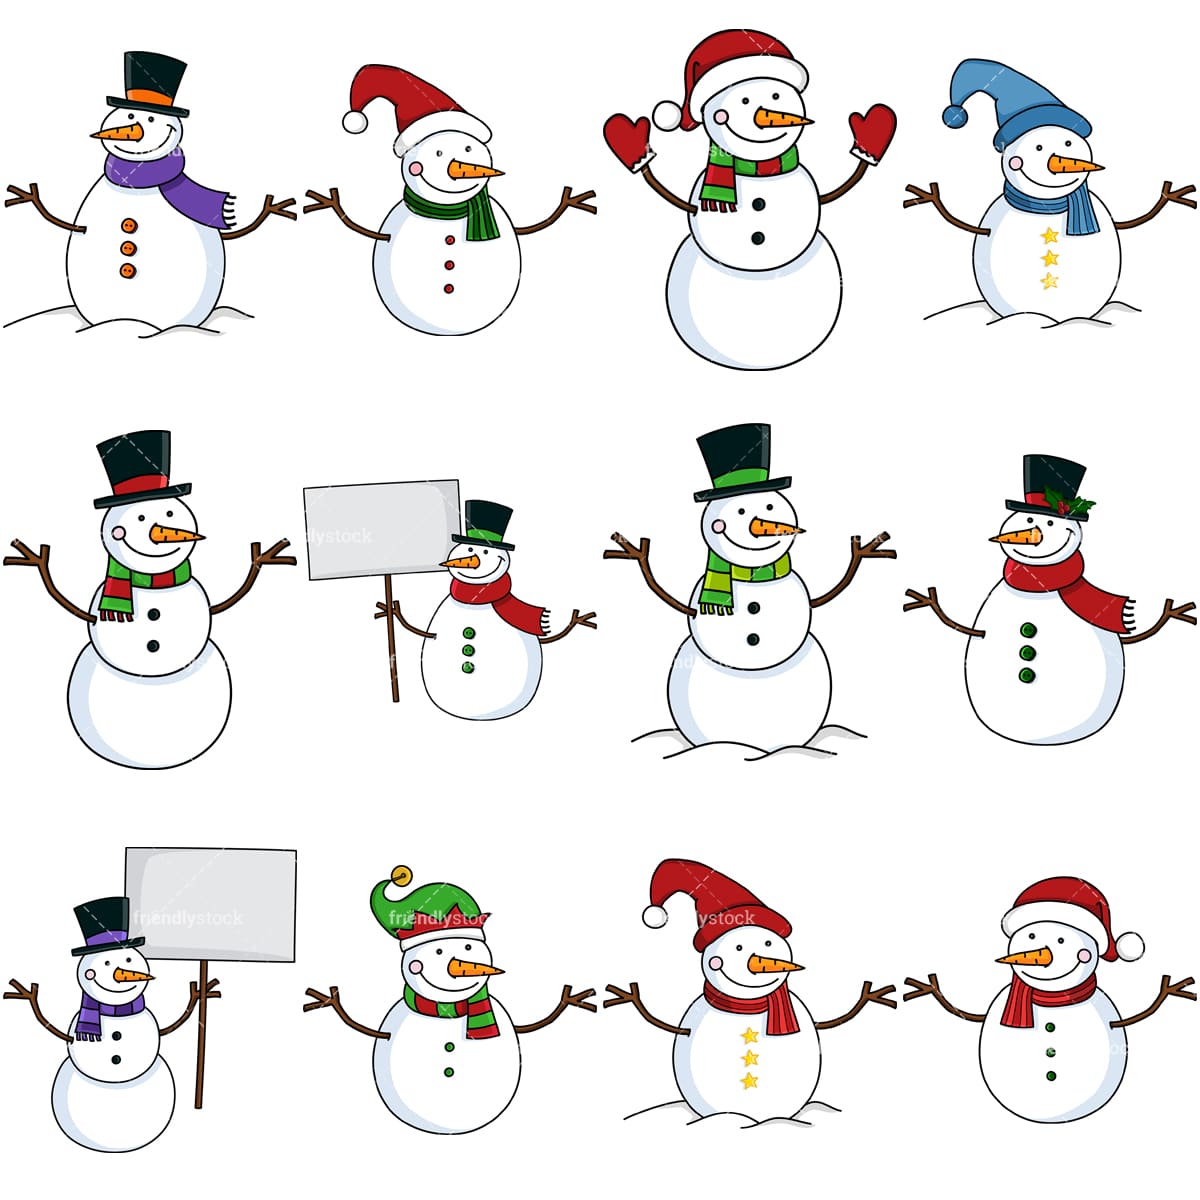 Images Of Snowman Cartoon / Download 48,310 snowman cartoon stock ...